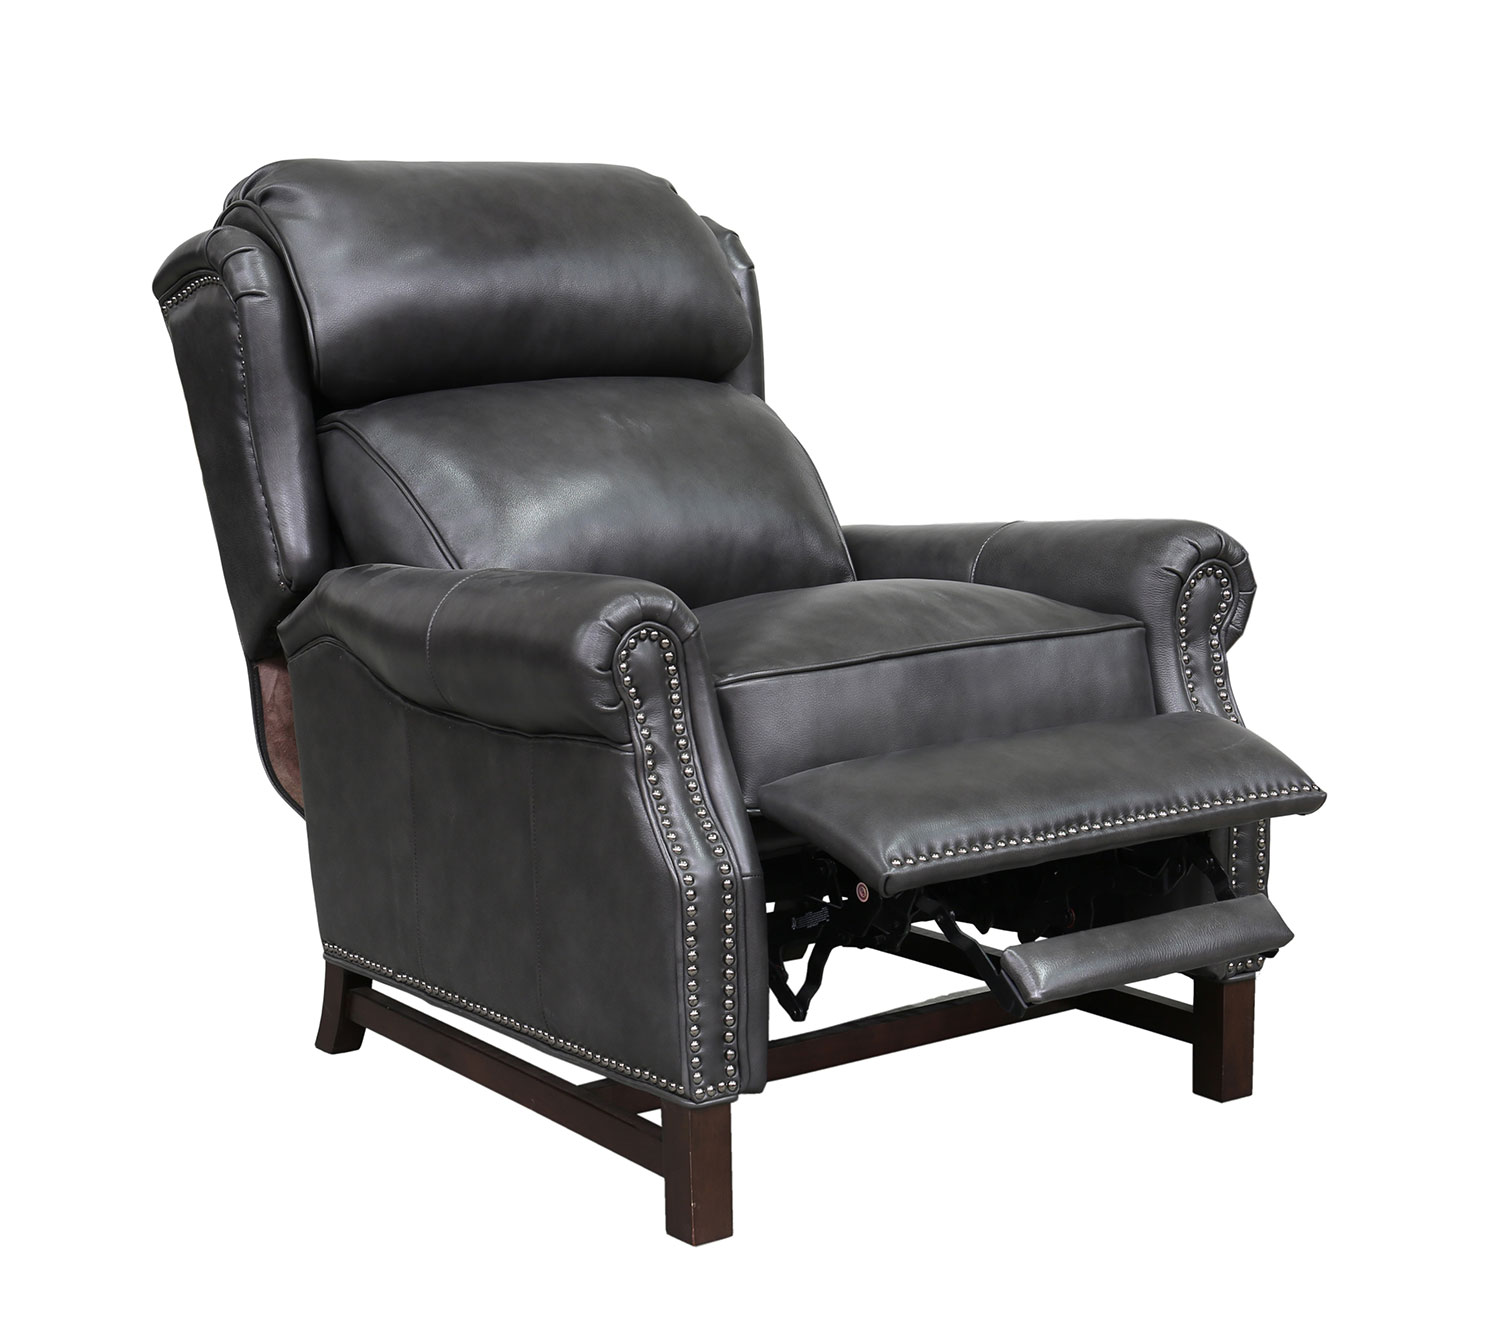 Barcalounger Thornfield Recliner Chair - Wrenn Gray/all leather